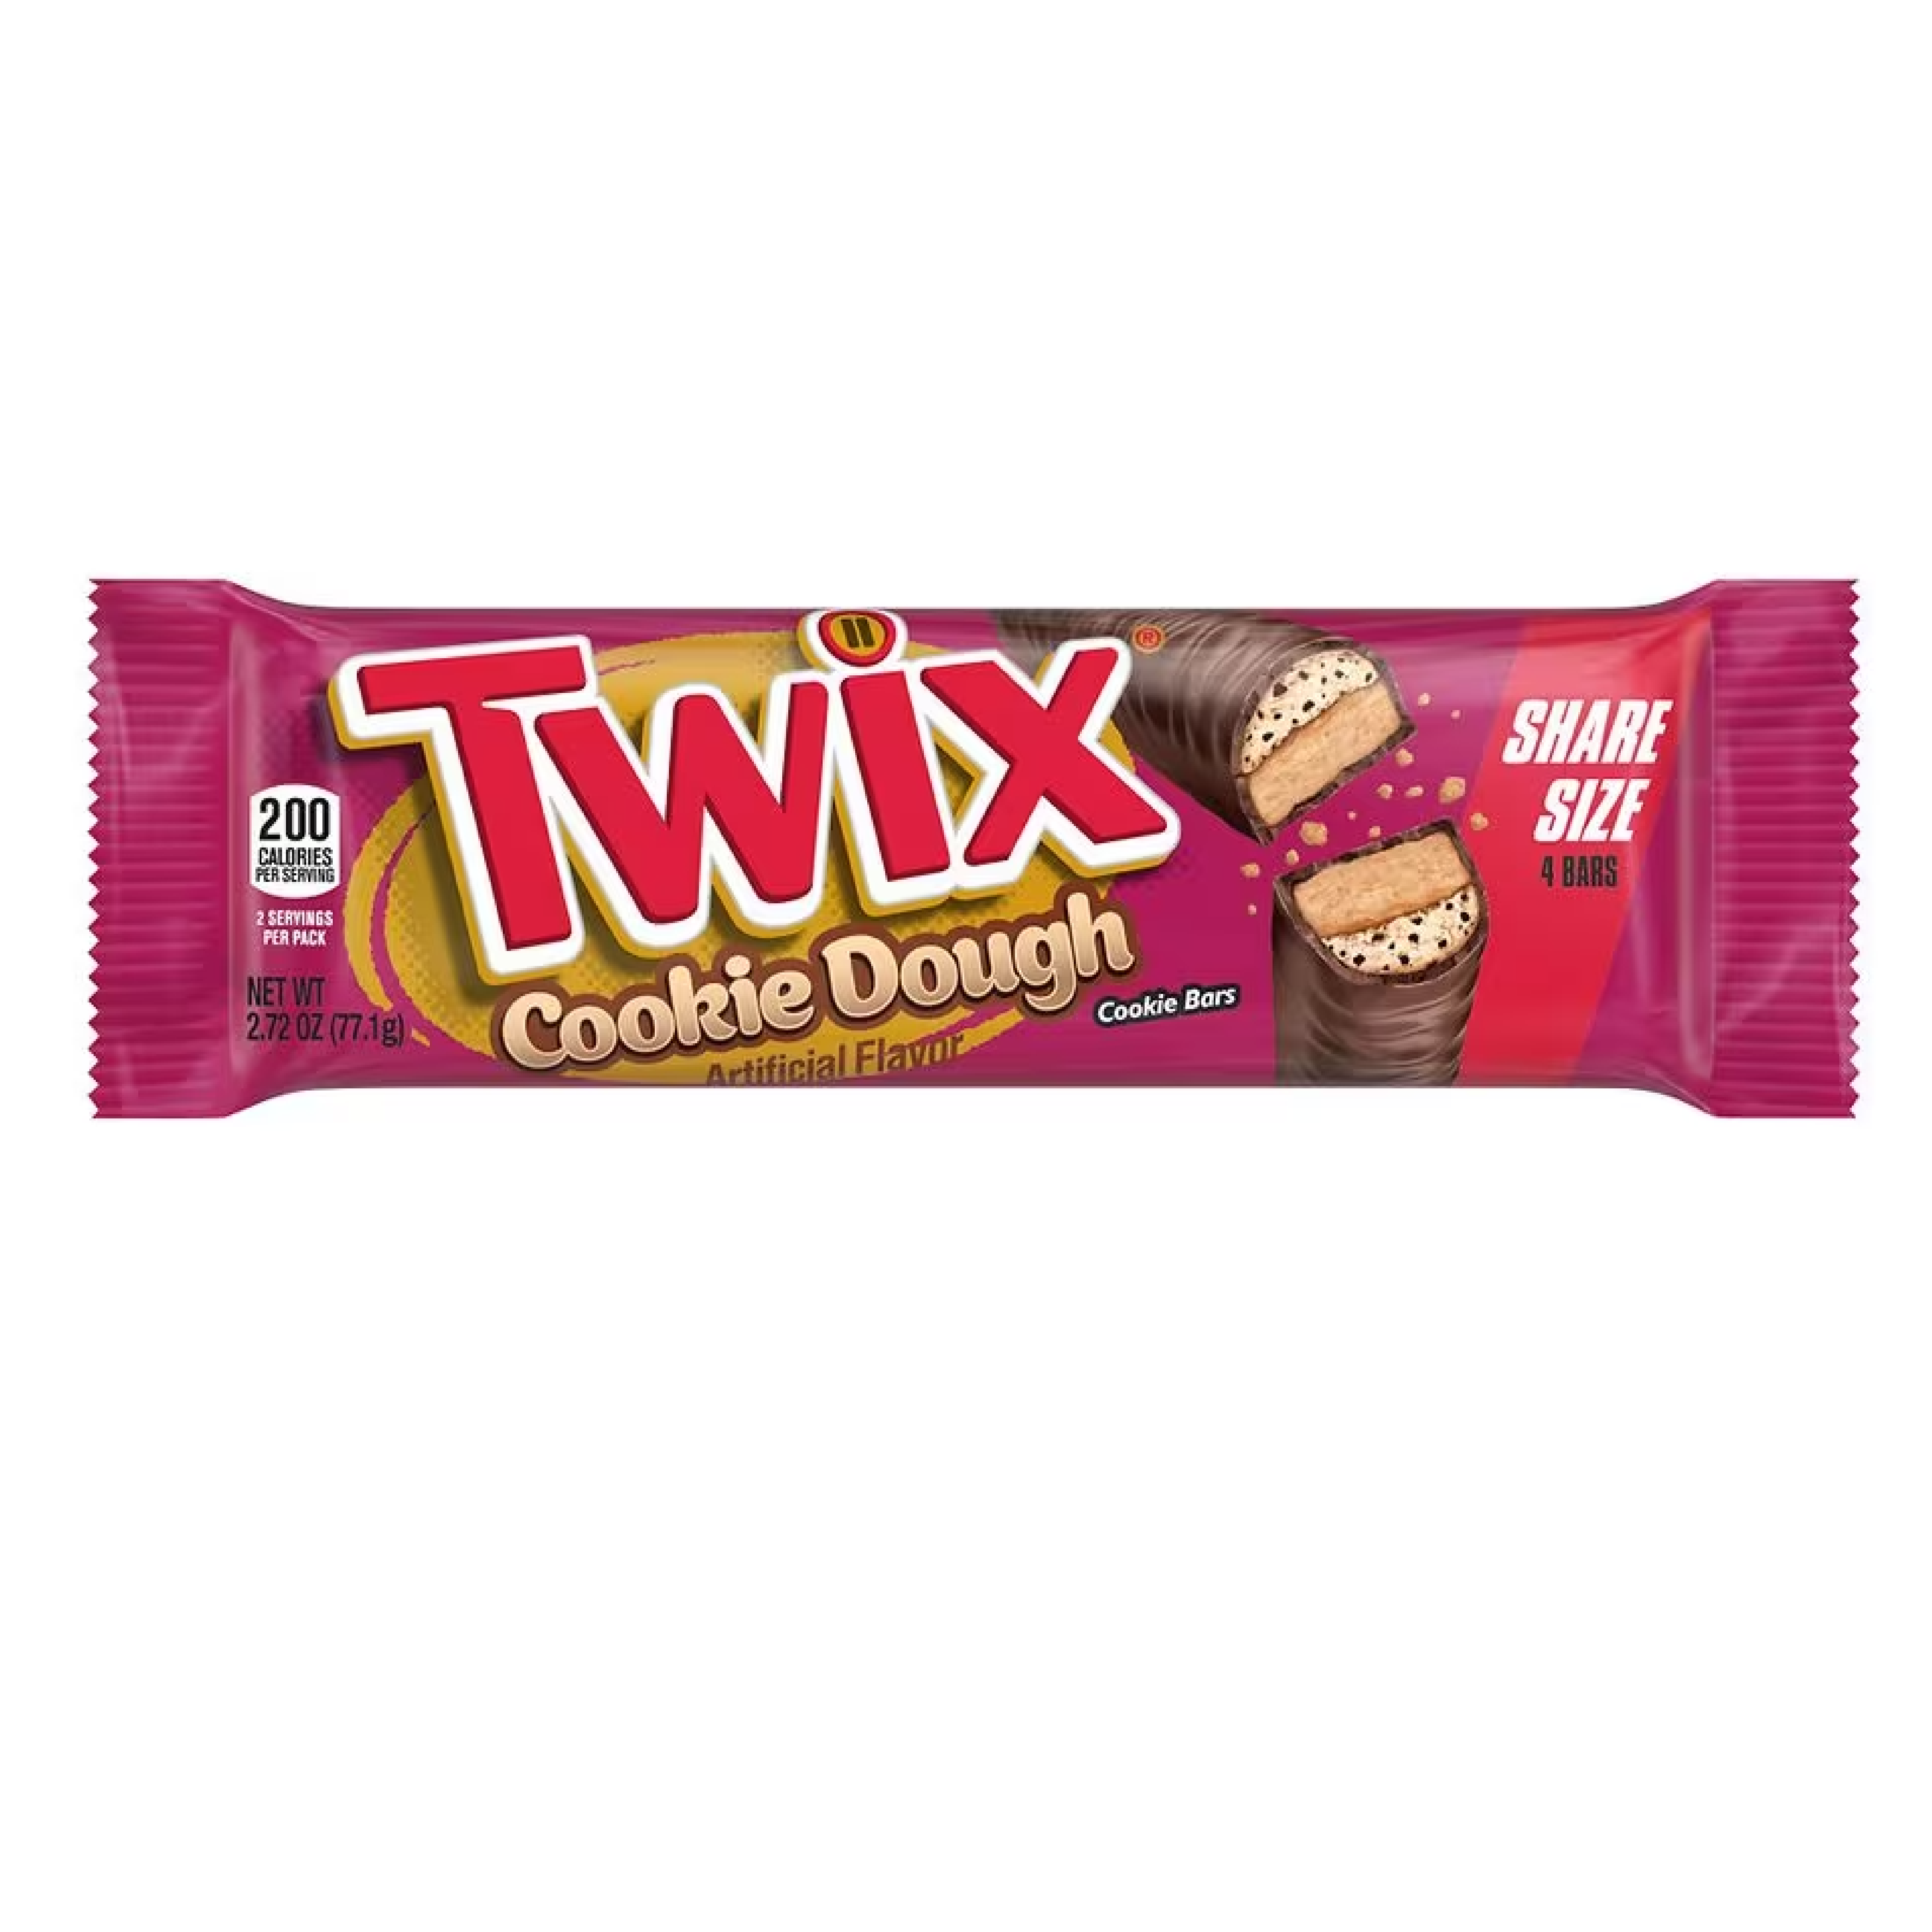 Twix Cookie Dough Share Size 2.72 oz